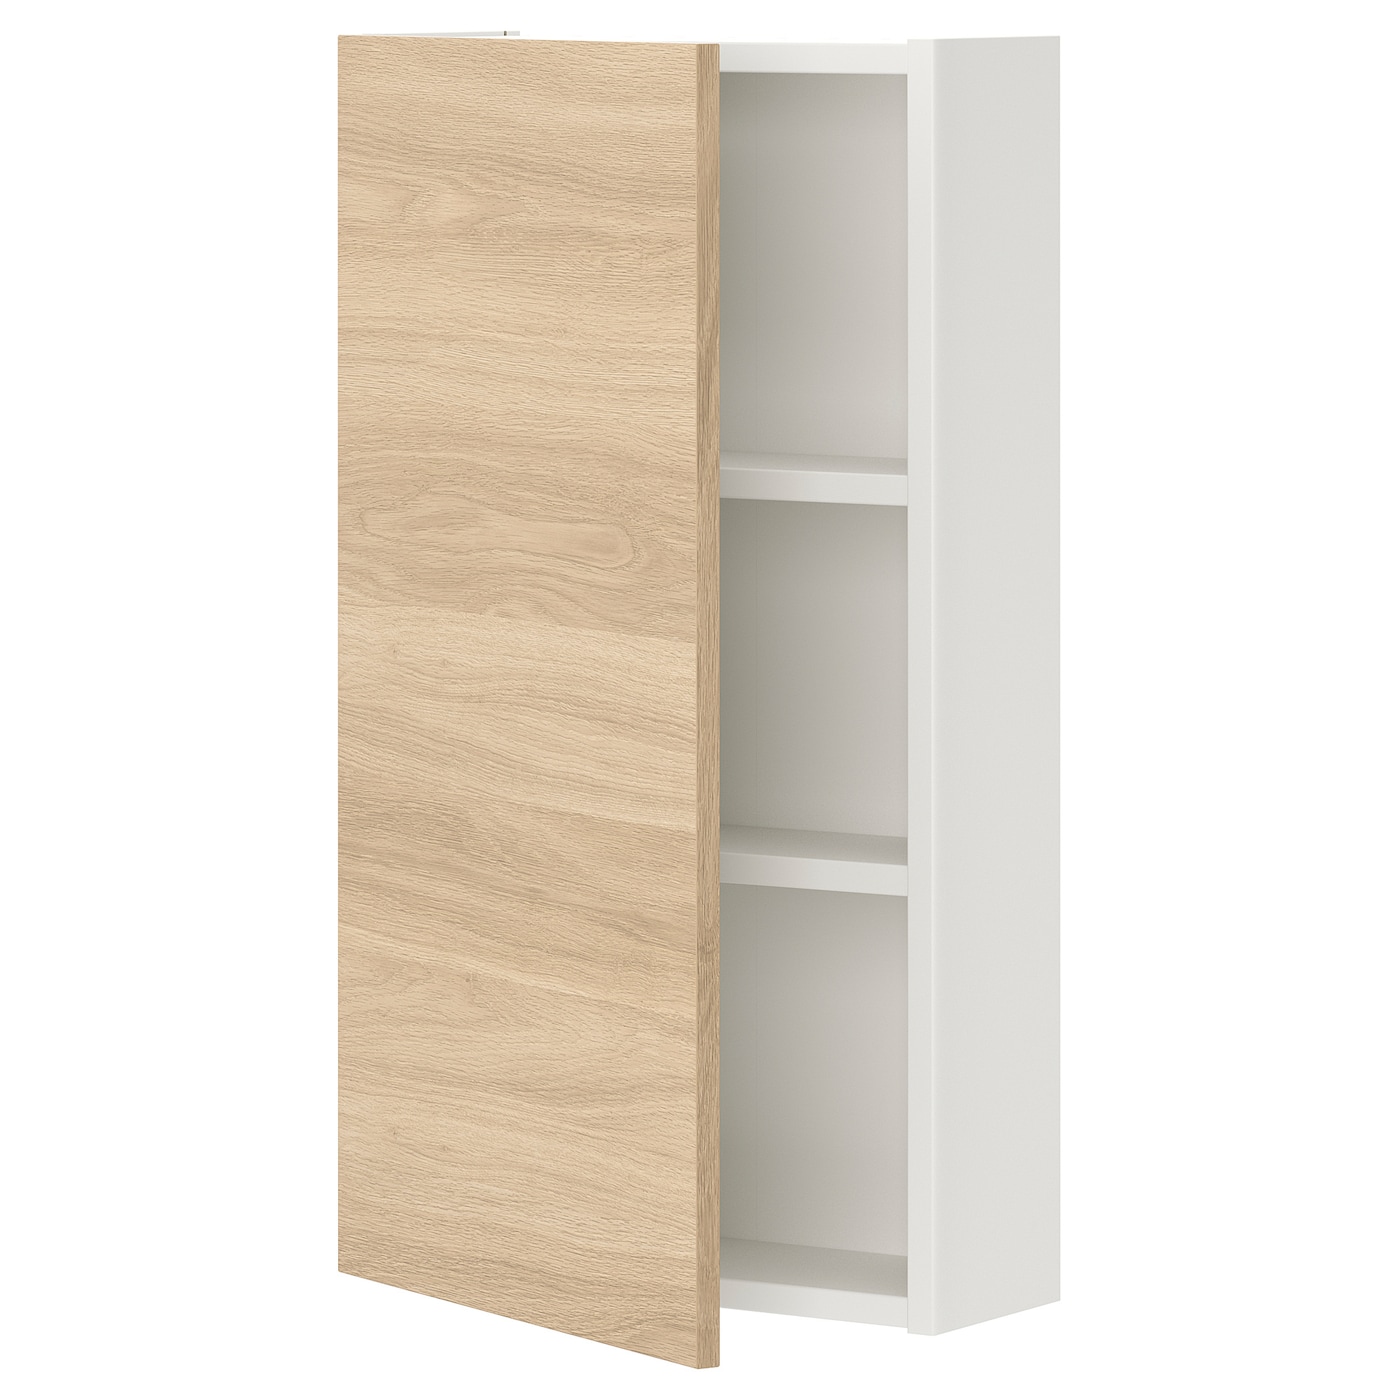 Настенный шкаф для ванной комнаты - ENHET IKEA/ ЭНХЕТ ИКЕА, 40x15x75 см, белый/бежевый